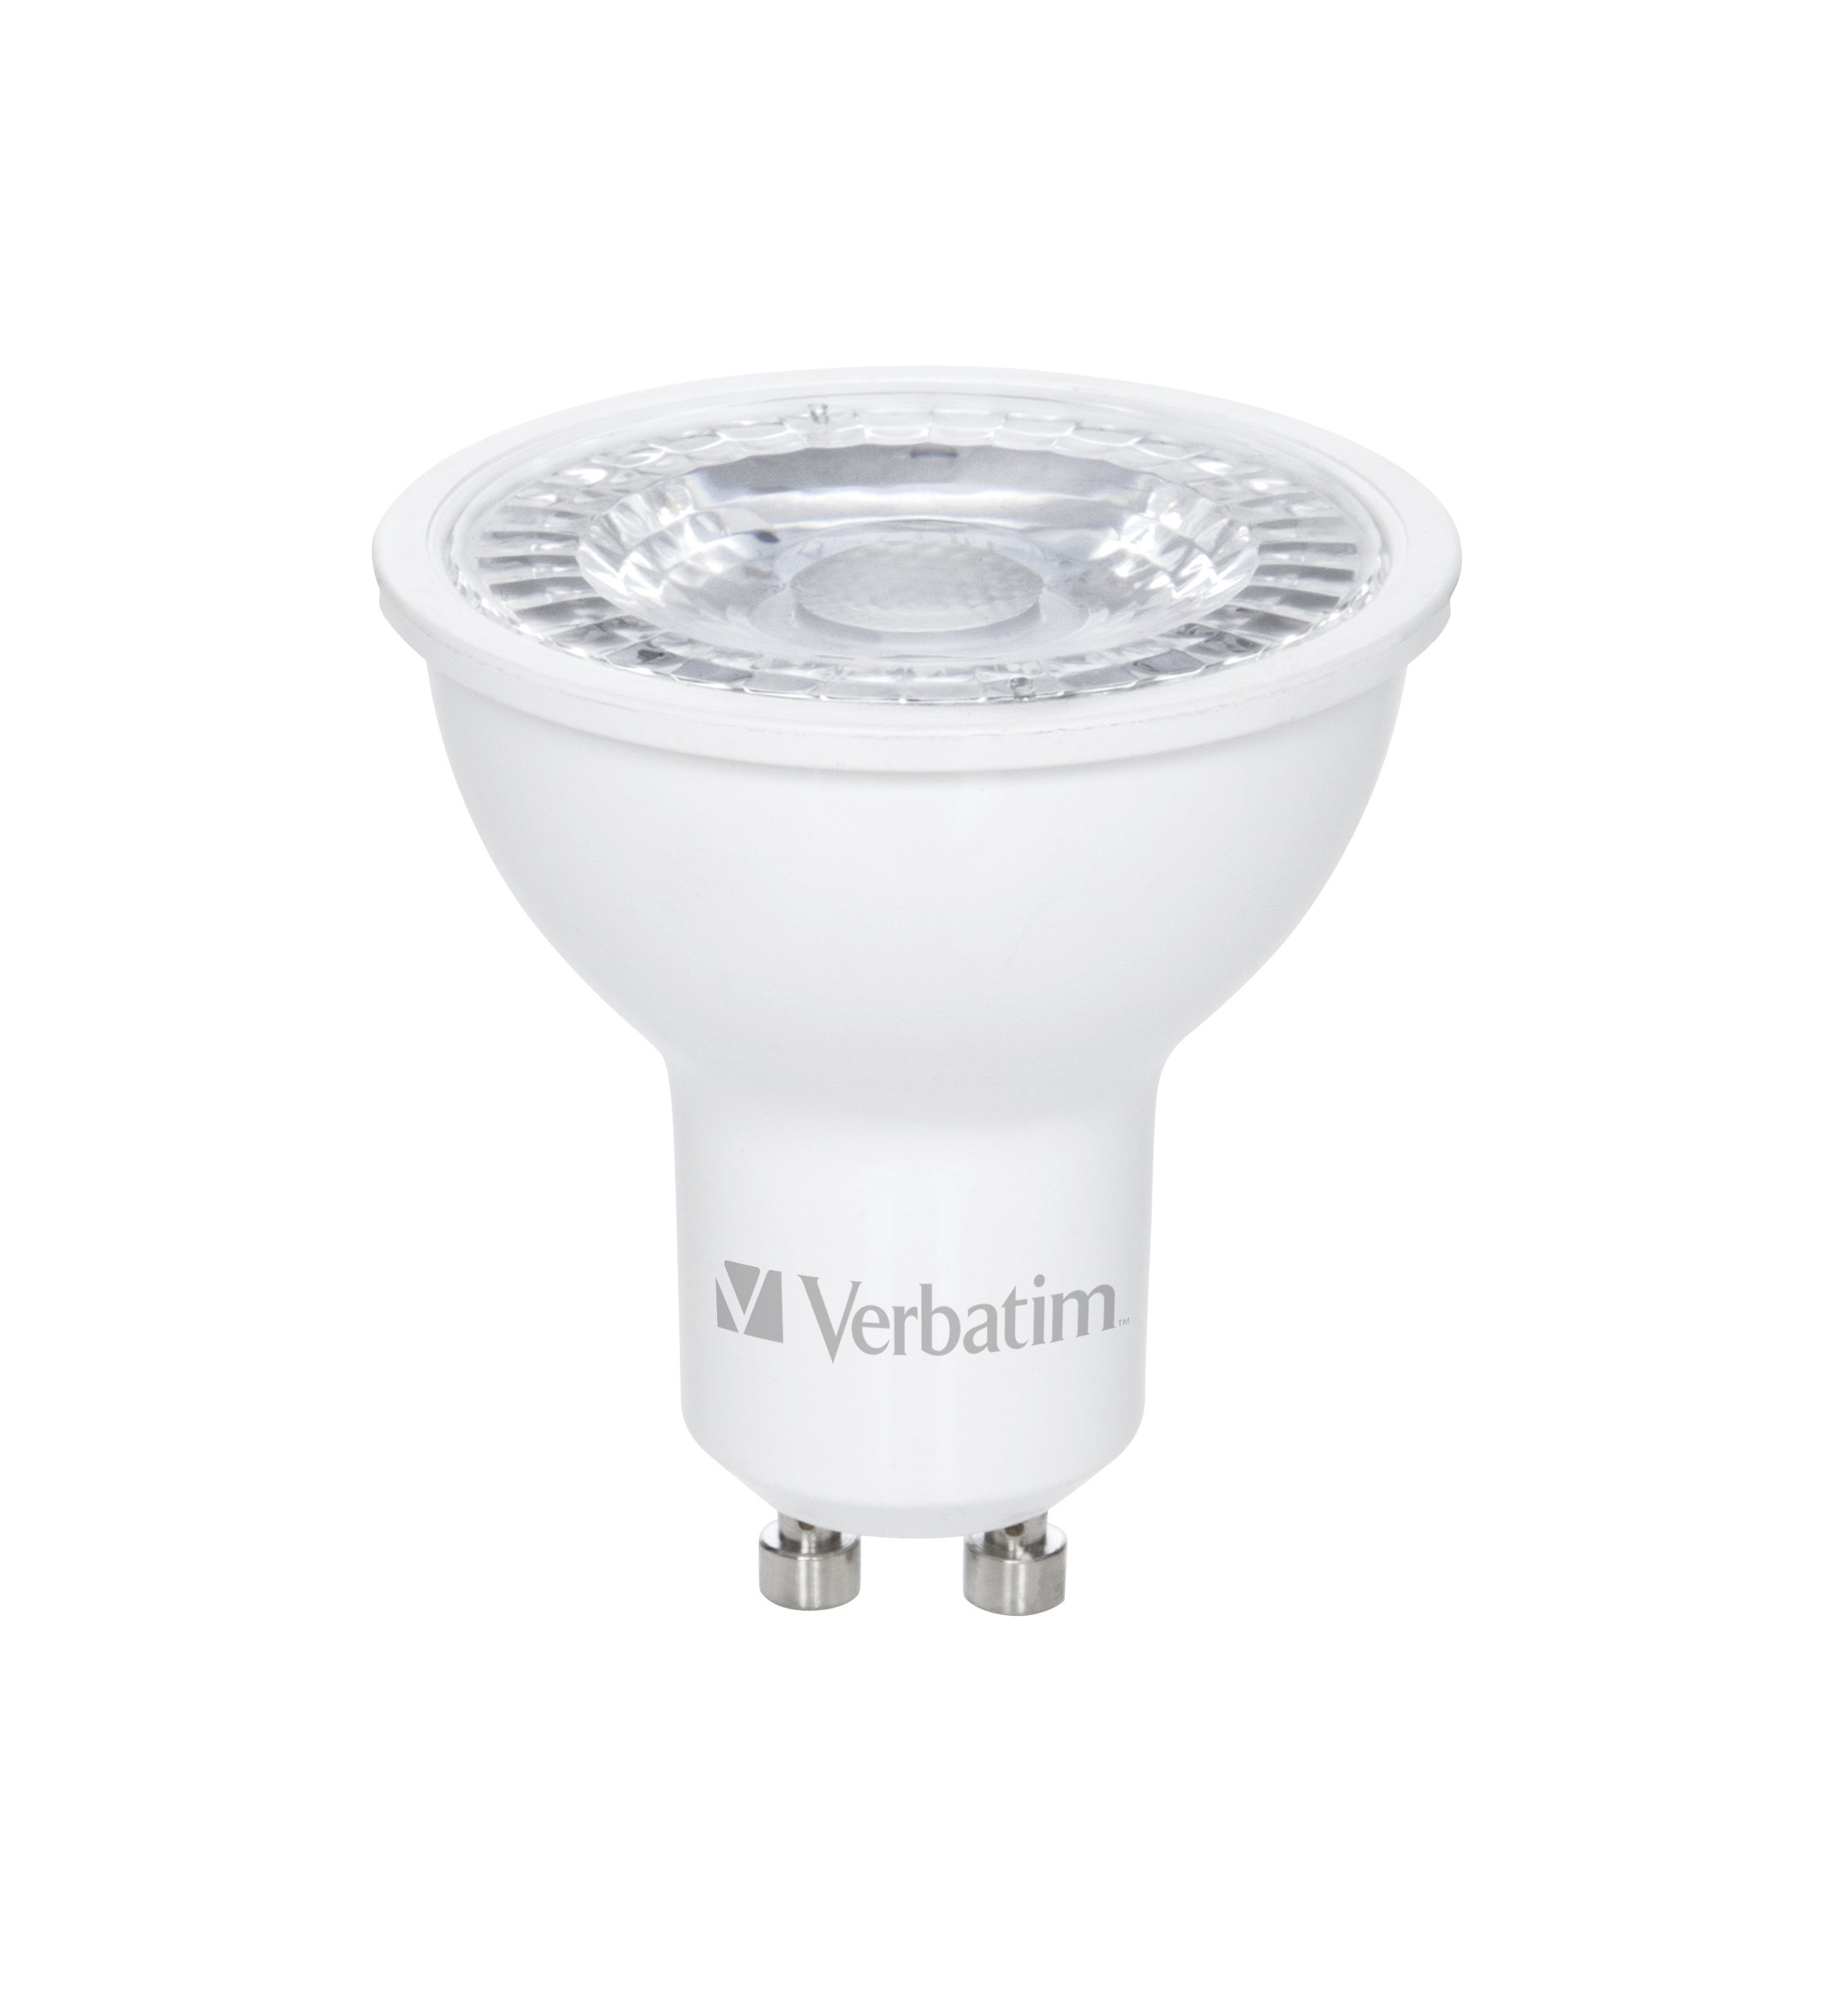 lampade LED Verbatim 52644 5W GU10 A+ Bianco caldo lampada LED - GU10 -  Esseshop - Il tuo Partner in Informatica, PC e Networking